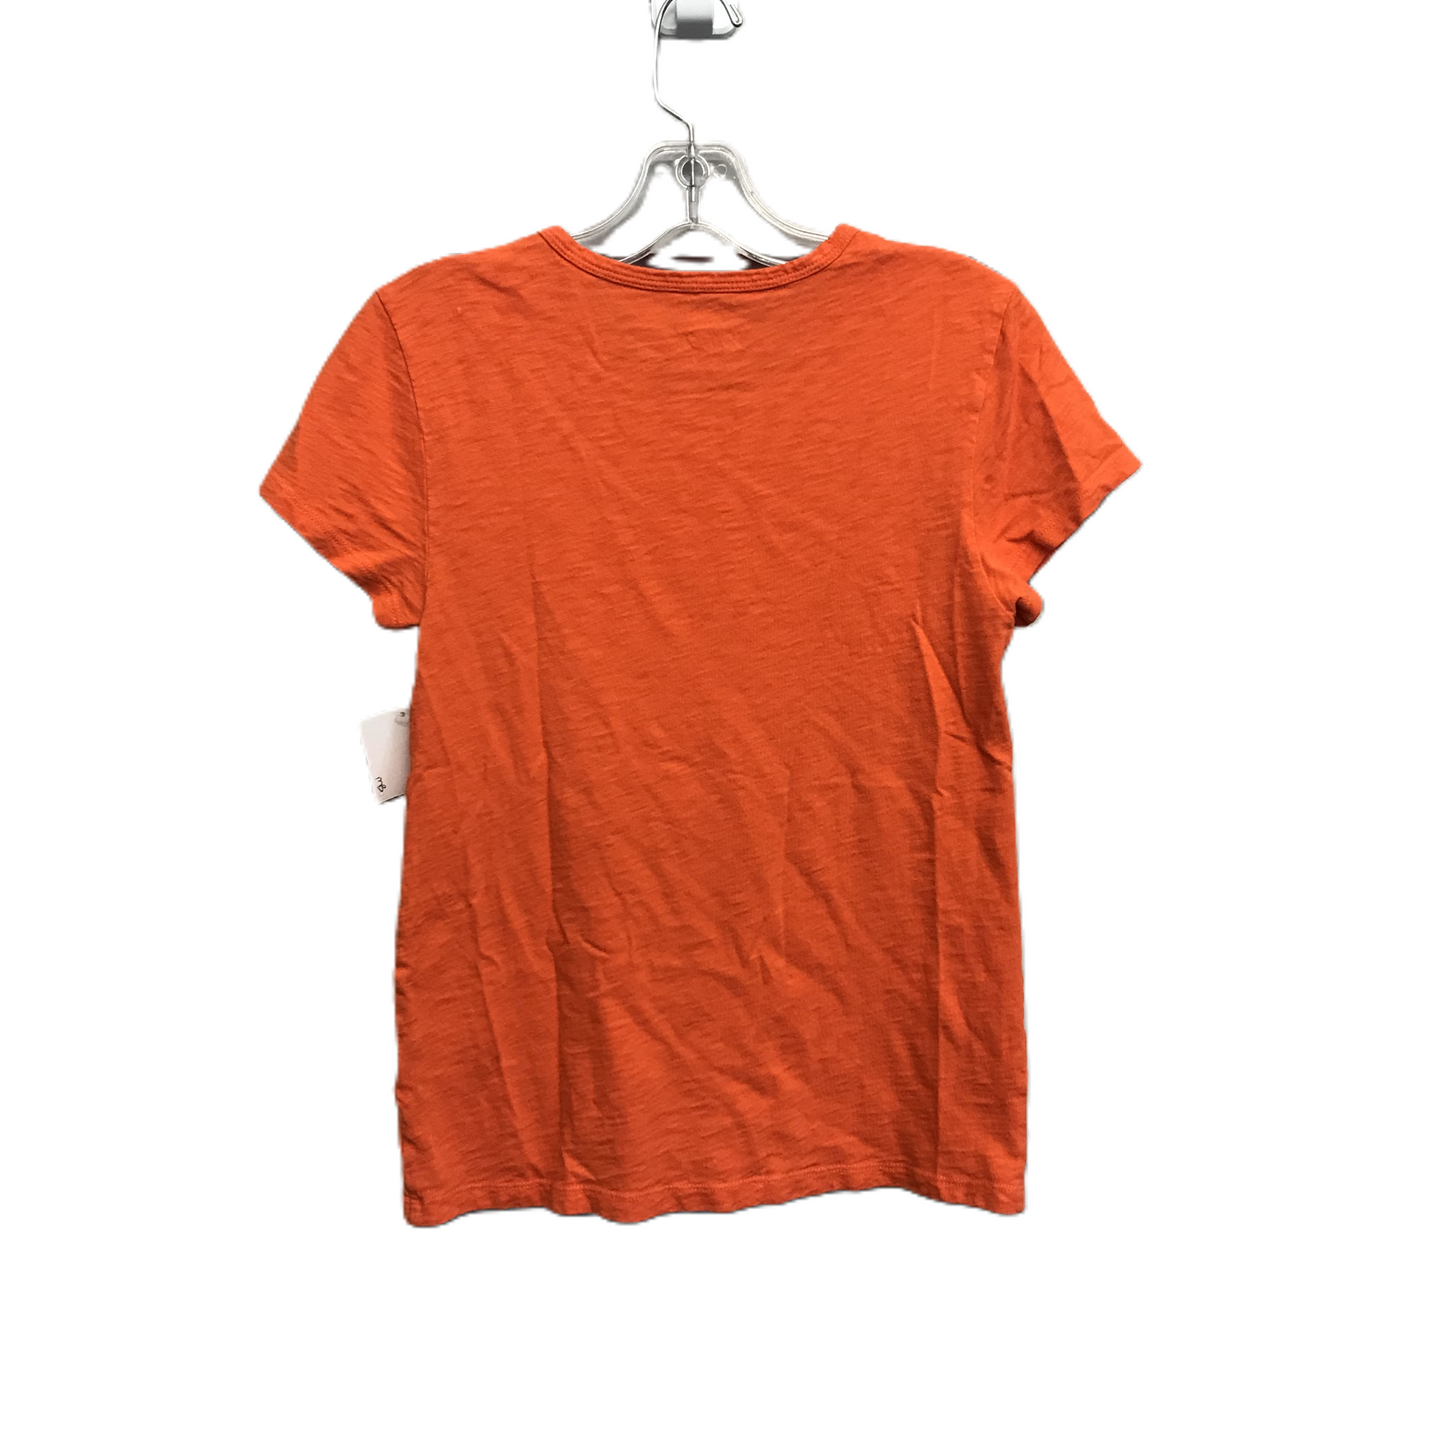 Orange Top Short Sleeve Basic By J. Crew, Size: S